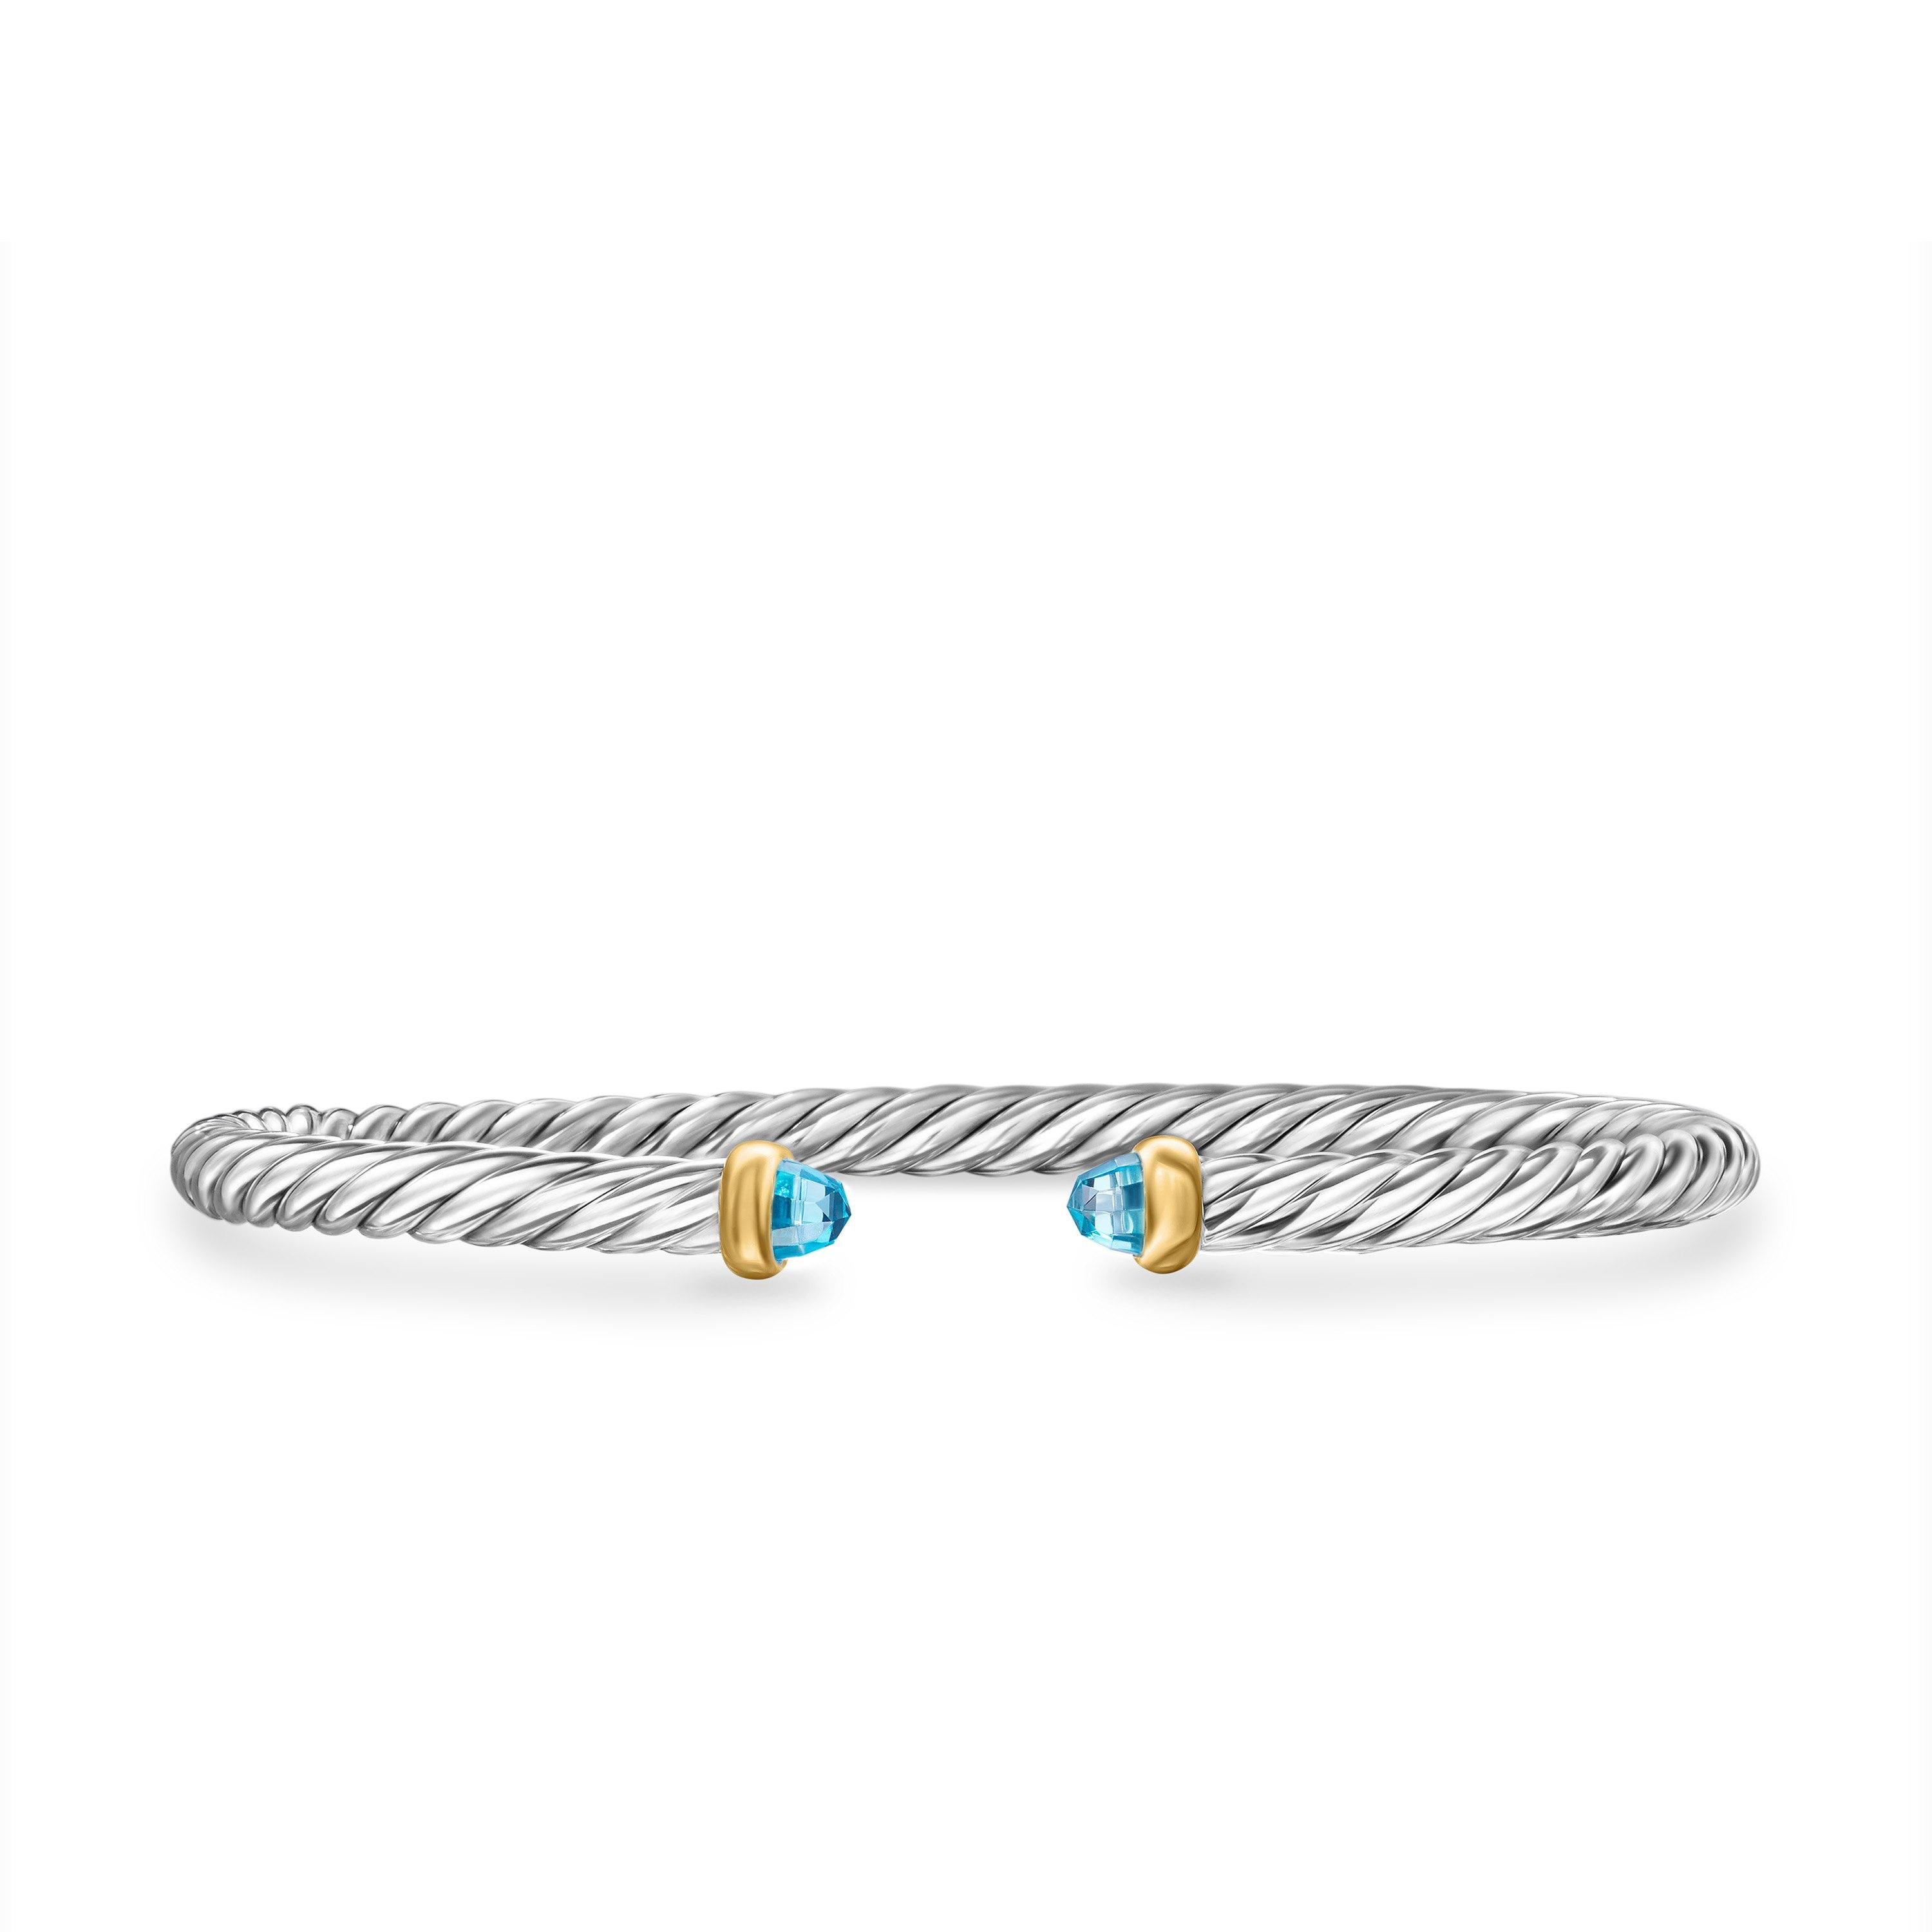 David Yurman Cable Flex Sterling Silver Bracelet with Blue Topaz, Size Large 0